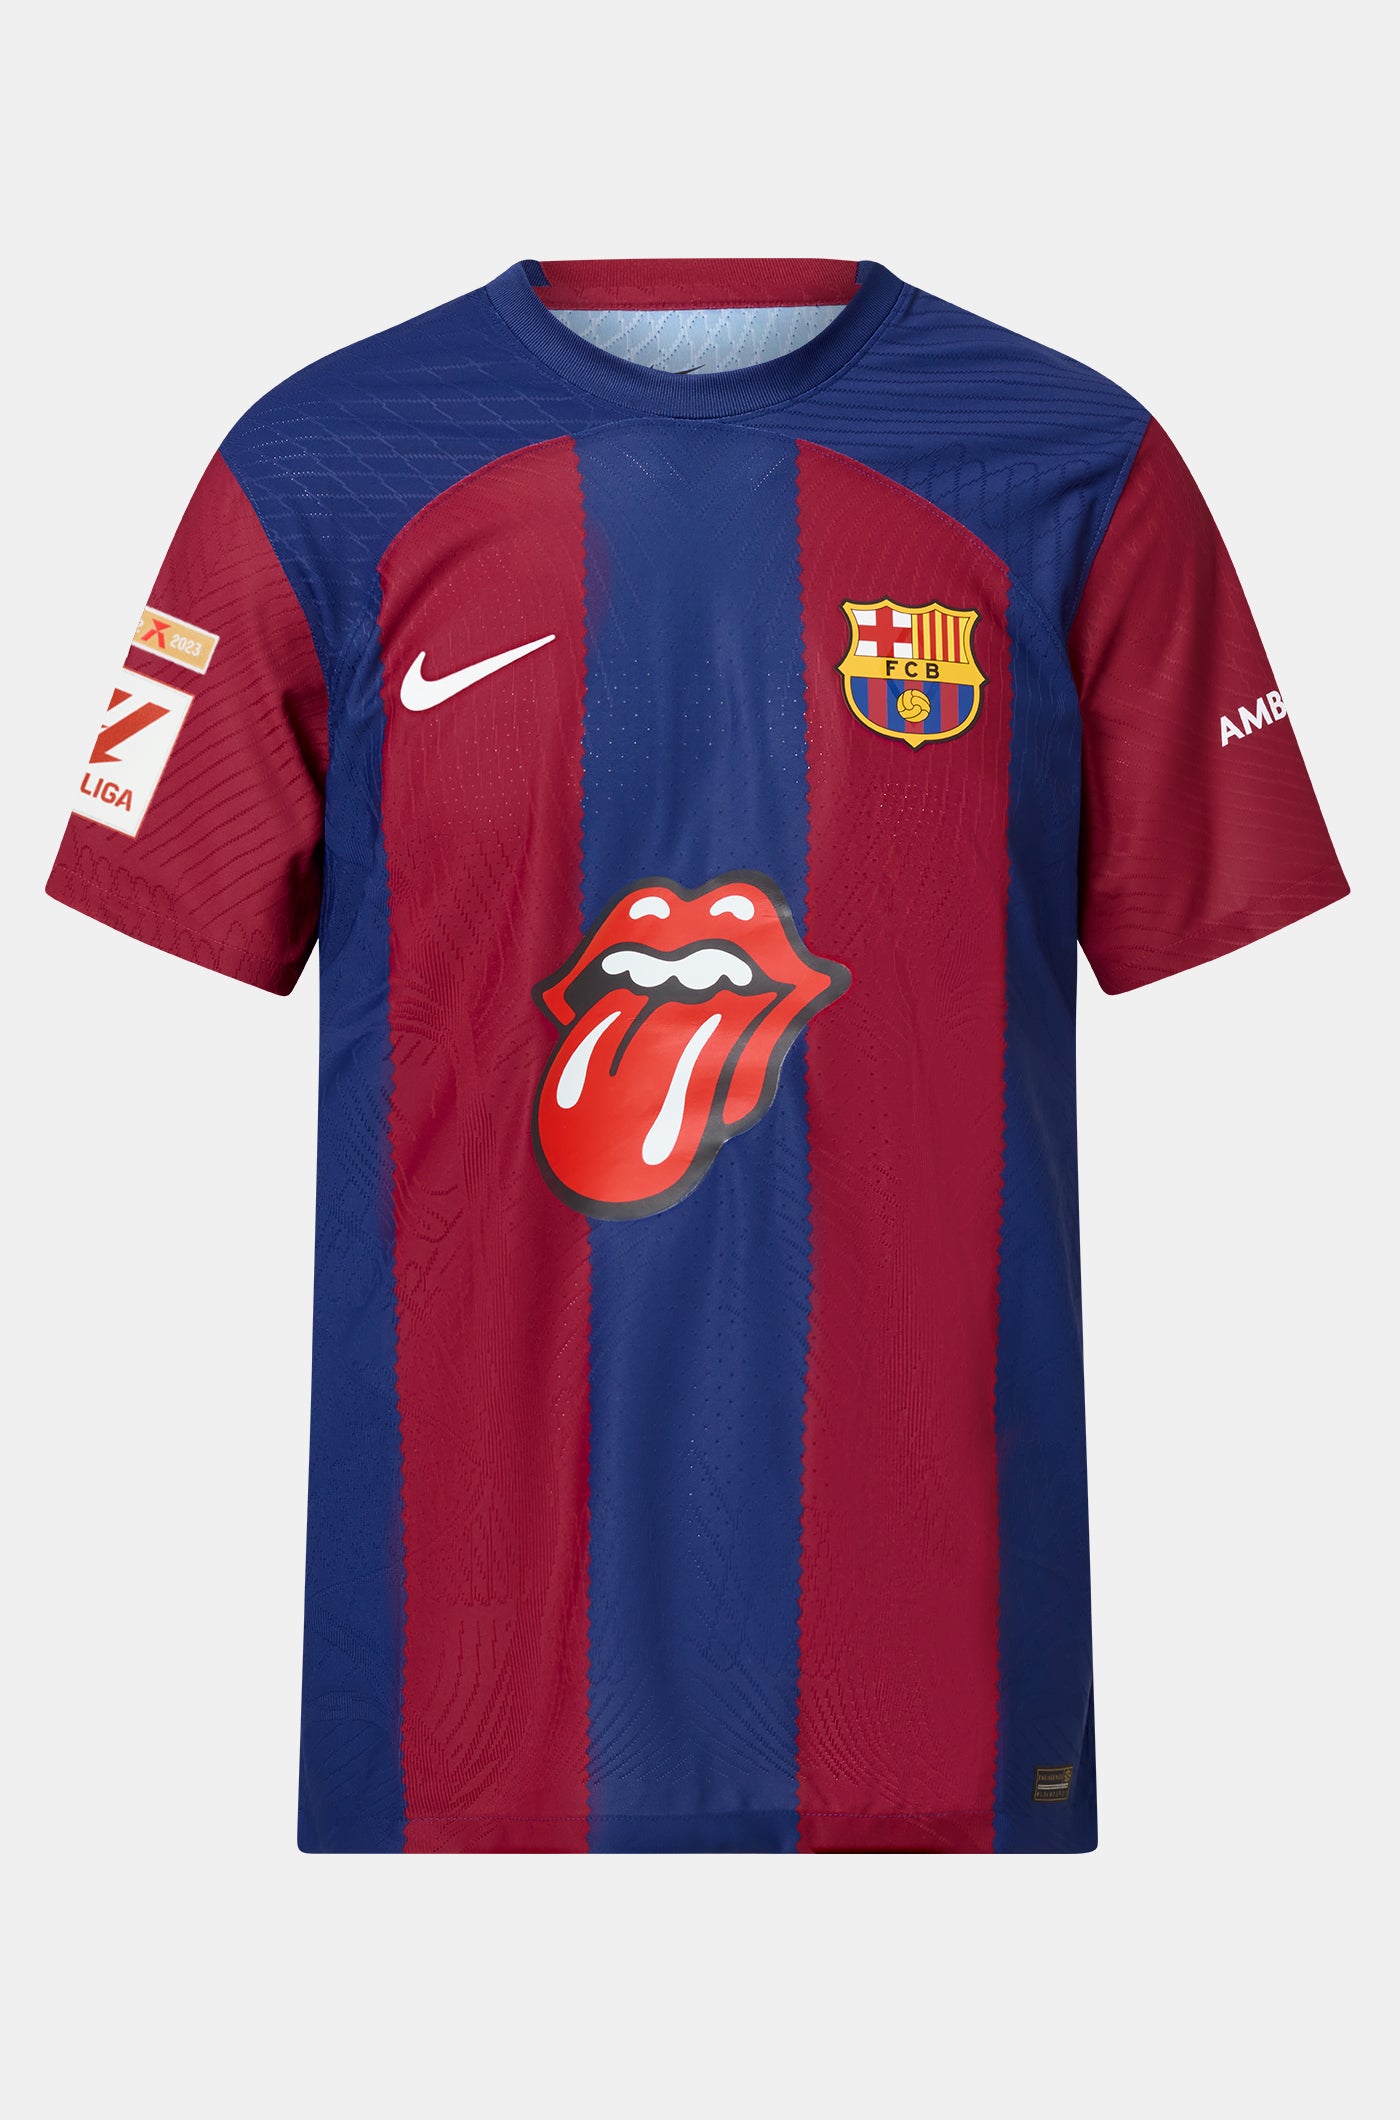 Limited-Edition-Trikot "Rolling Stones“. Heimtrikot der Herrenmannschaft des FC Barcelona 23/24